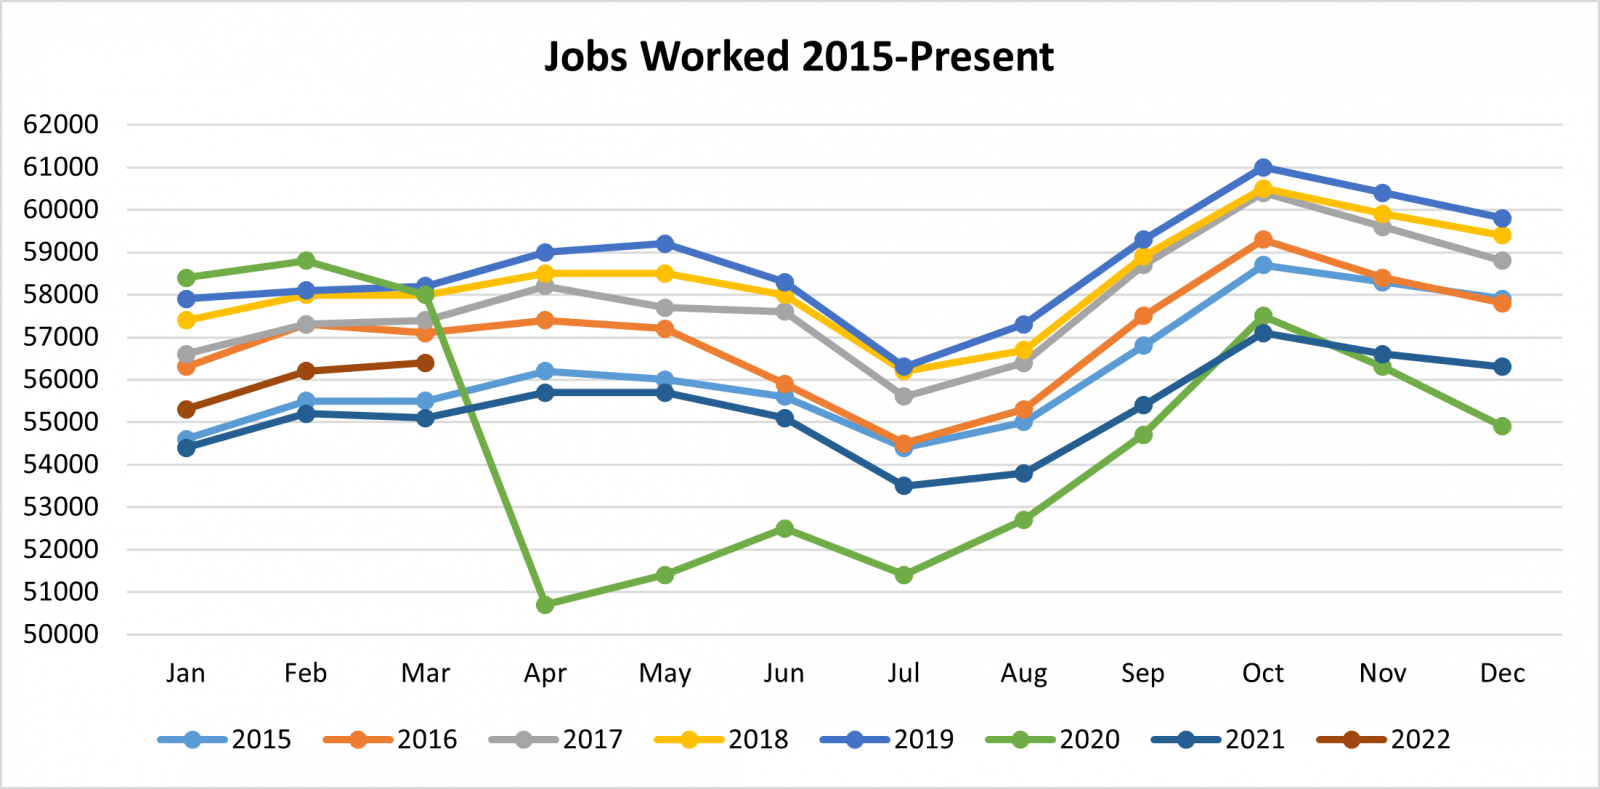 Jobs Worked 2015-Present